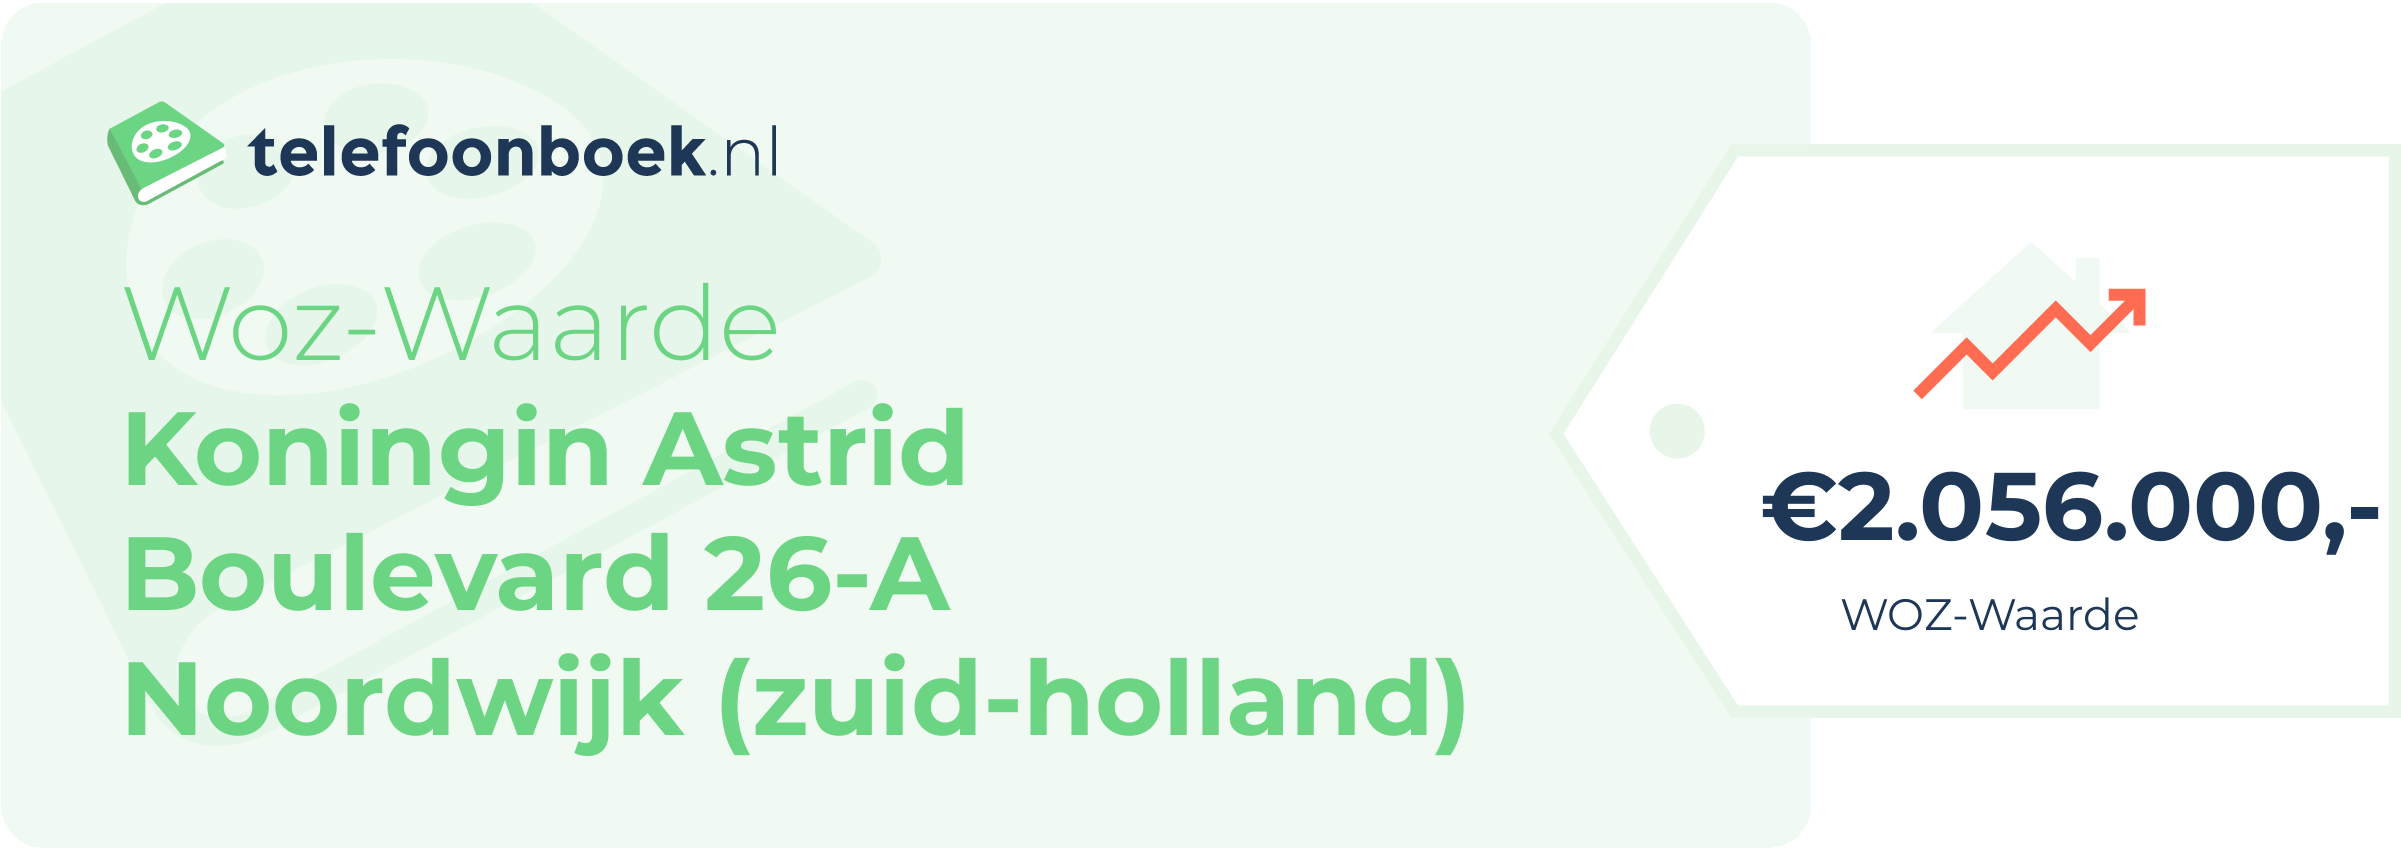 WOZ-waarde Koningin Astrid Boulevard 26-A Noordwijk (Zuid-Holland)